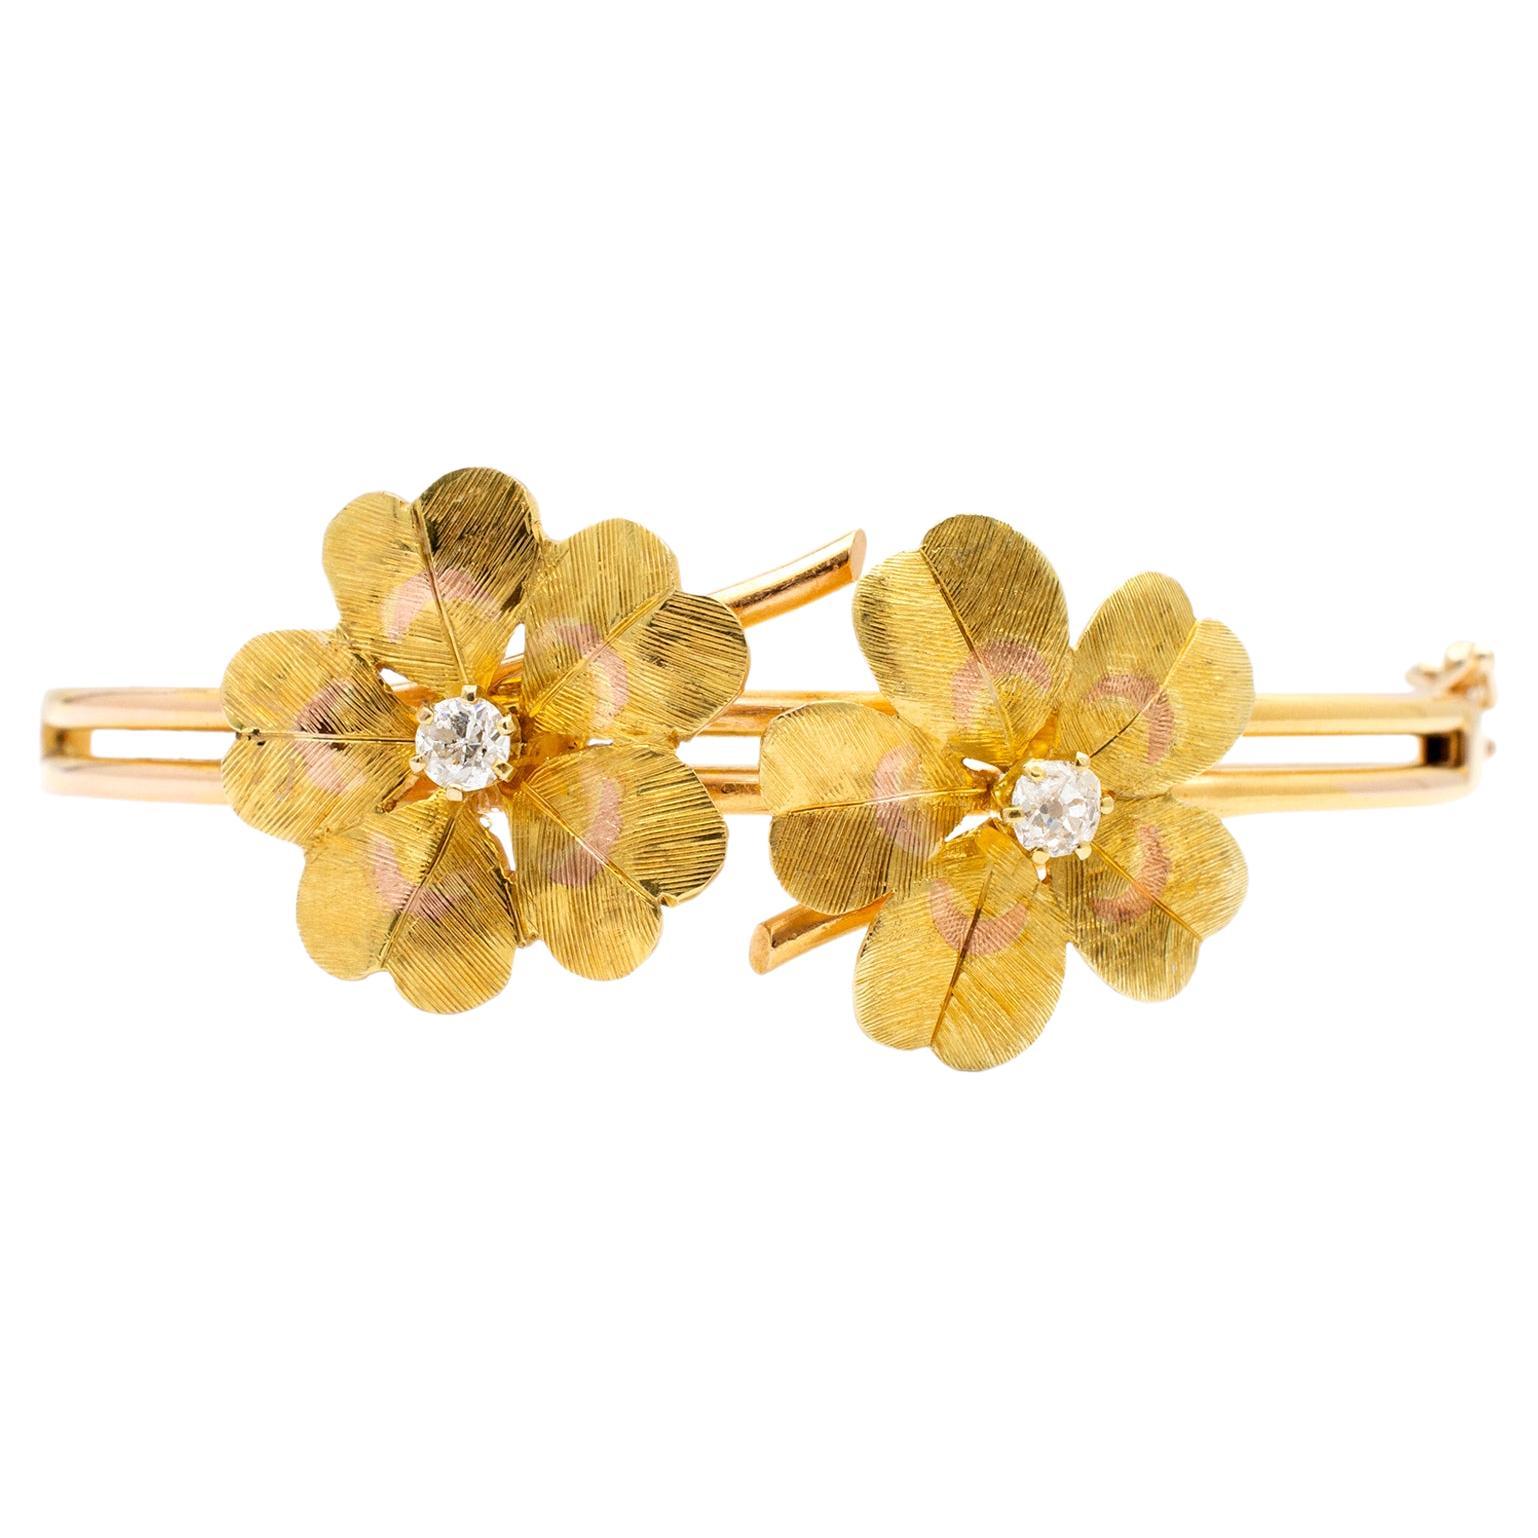 Ladies Vintage 18K Yellow Gold Diamond Flower Bangle Bracelet